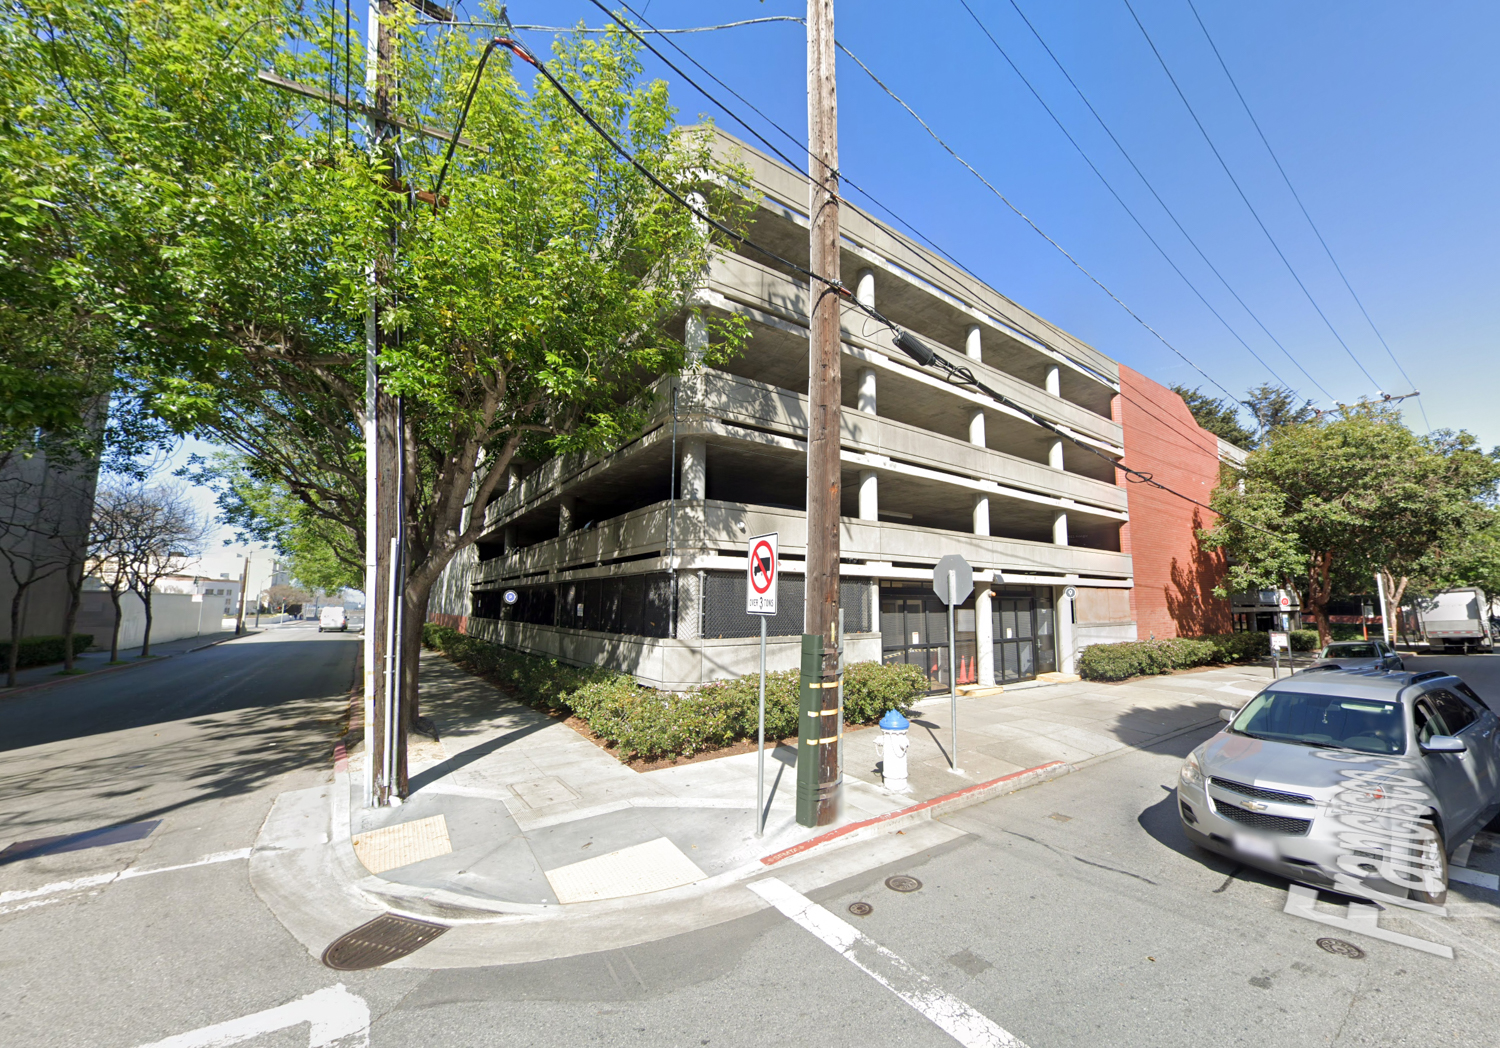 55 Francisco Street, image via Google Street View